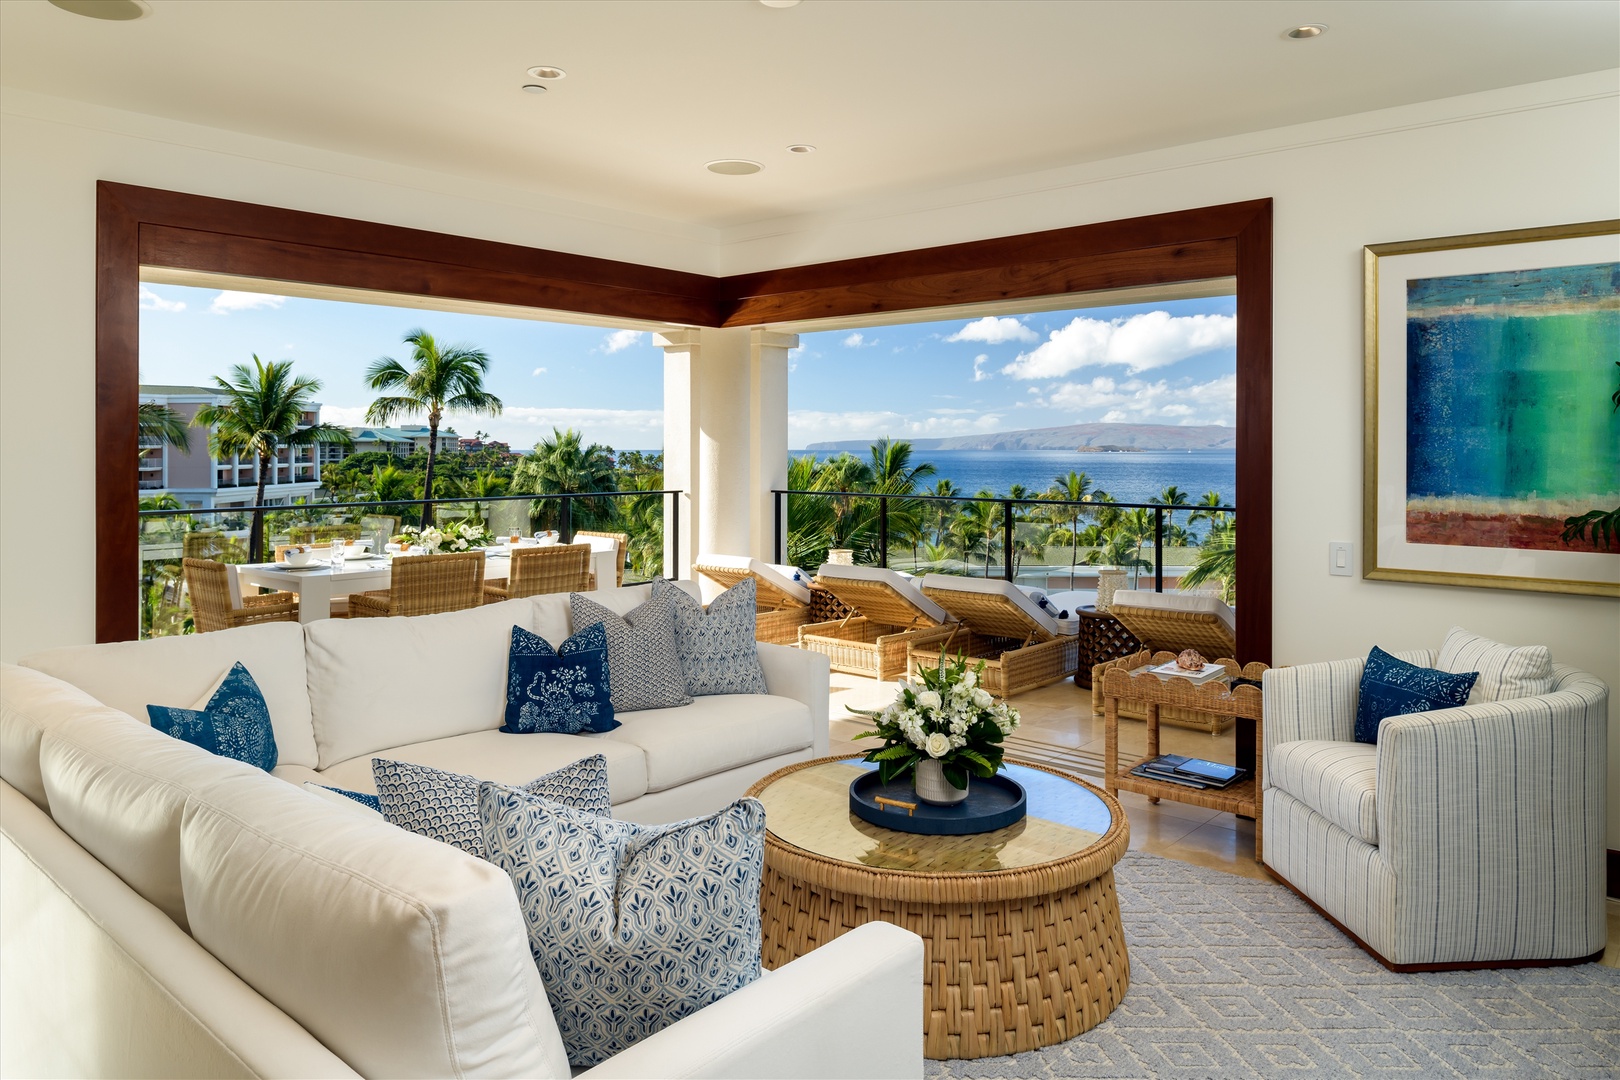 Wailea Vacation Rentals, Blue Ocean Suite H401 at Wailea Beach Villas* - Expansive Ocean View Great Room